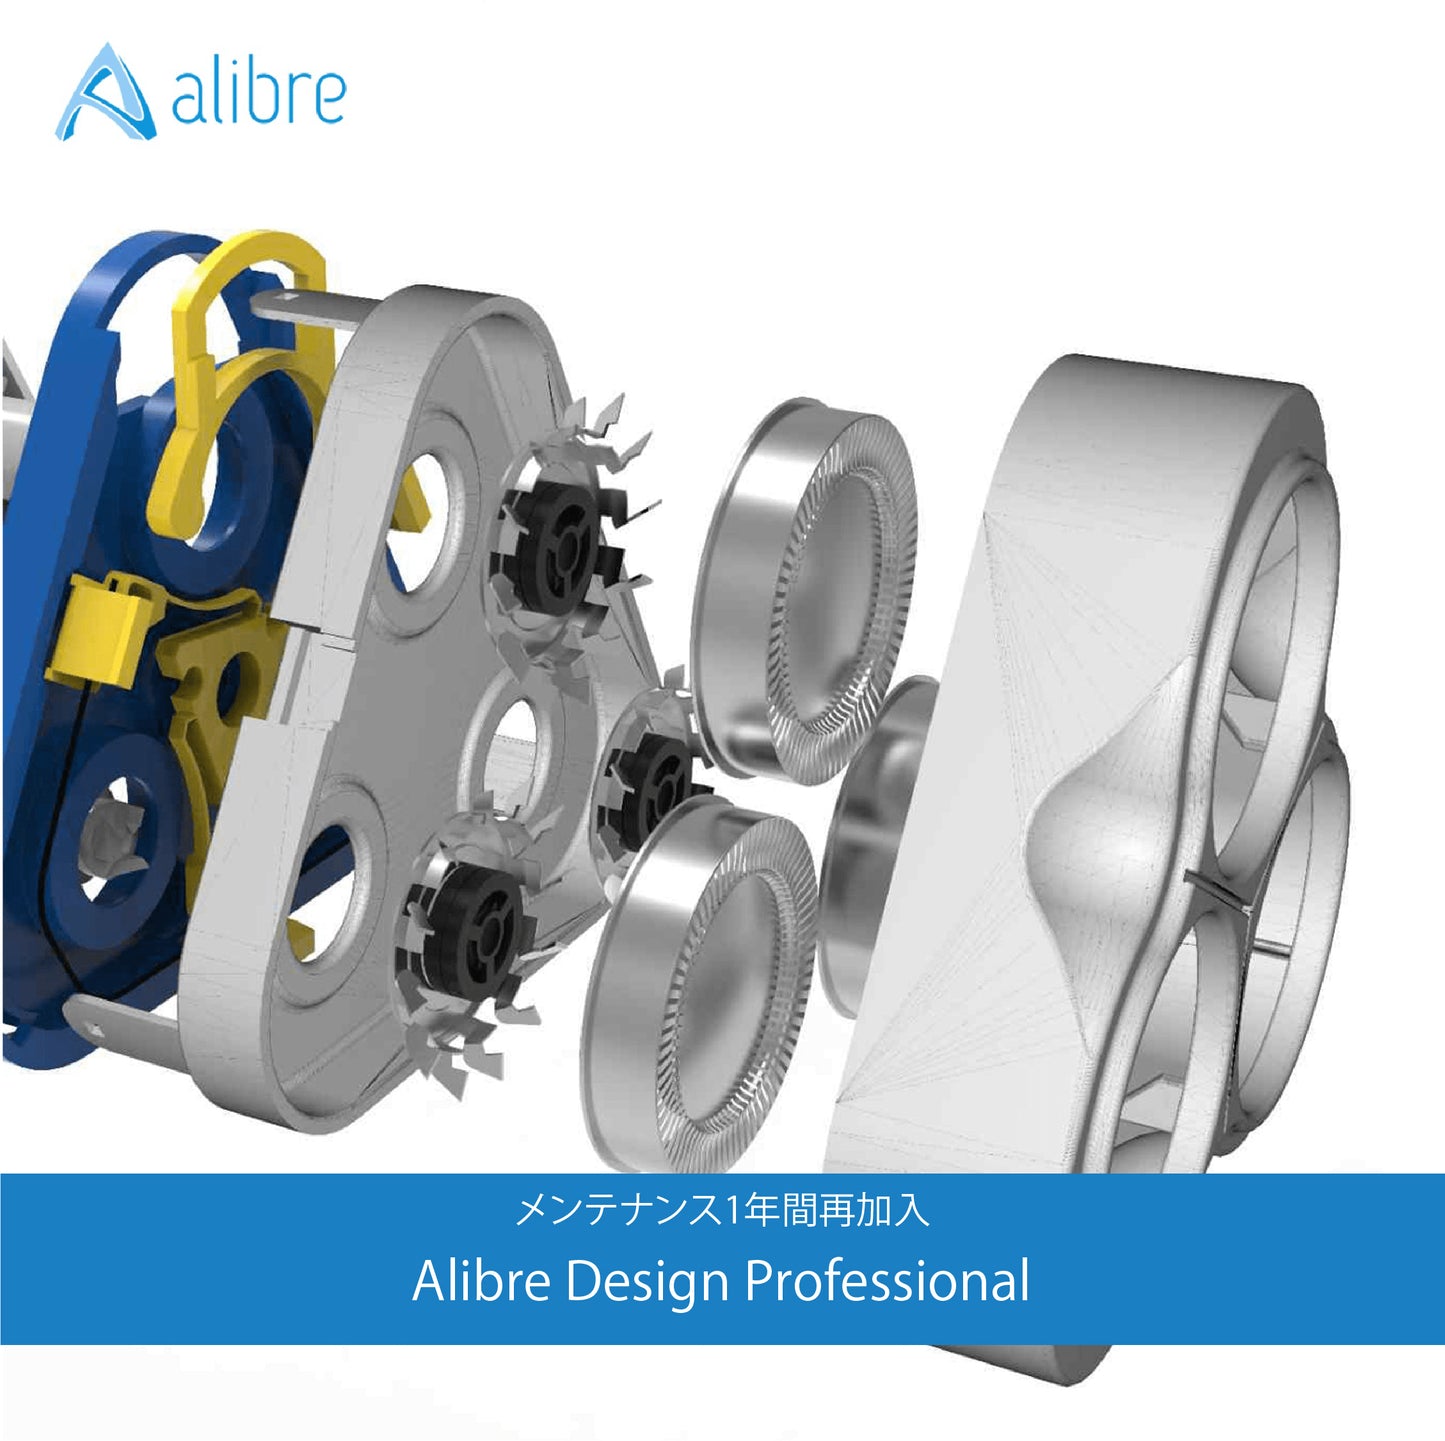 Alibre Design Professional メンテナンス1年間再加入